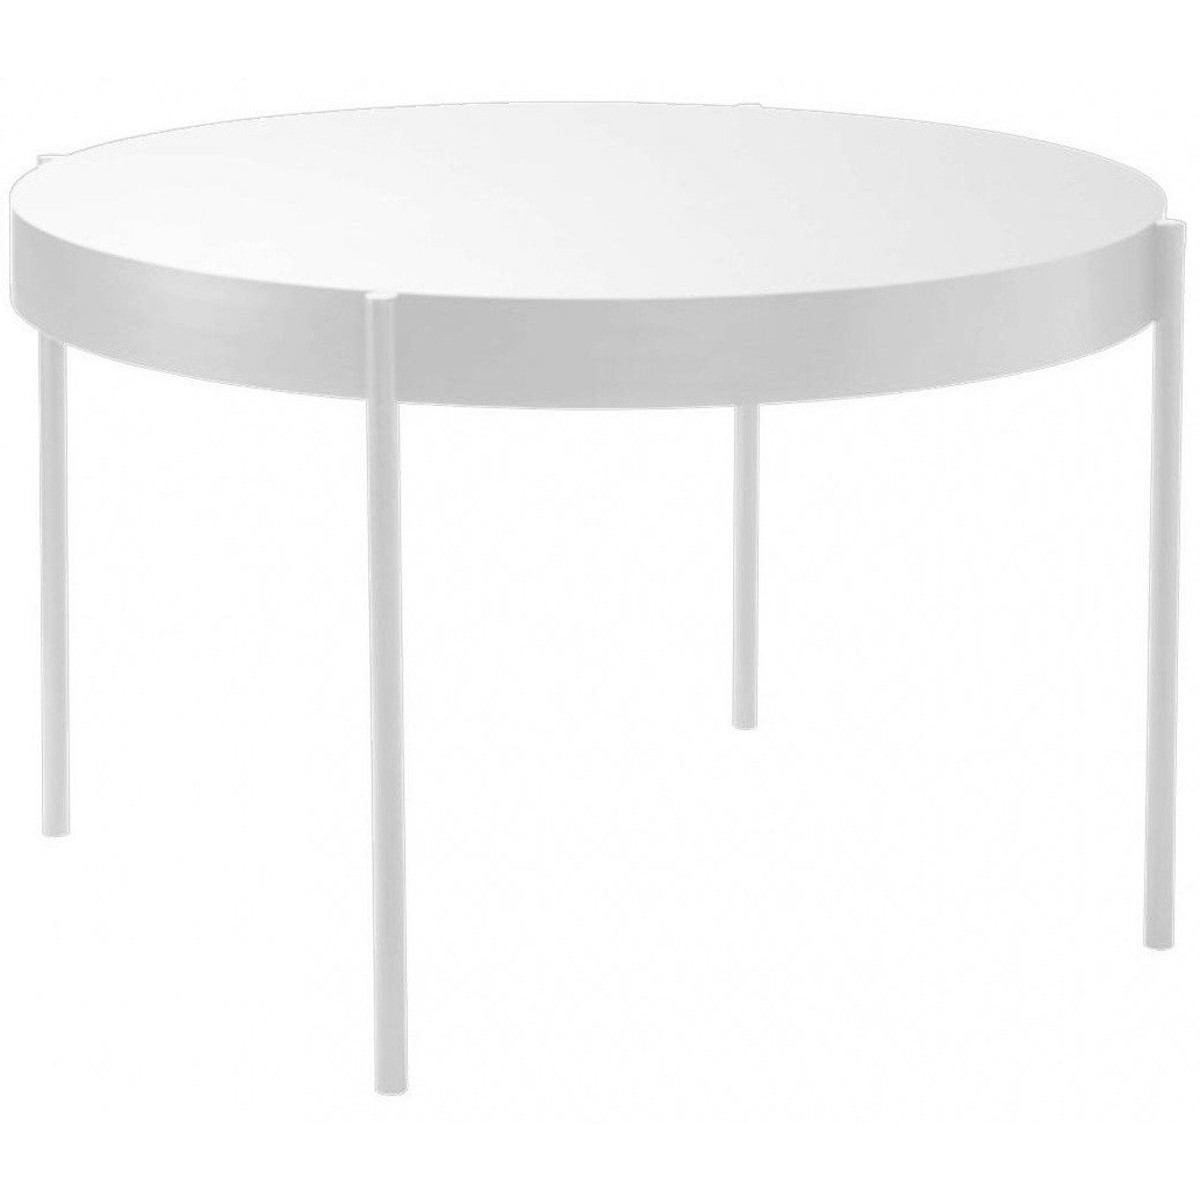 Ø120 - white - Series 430 table